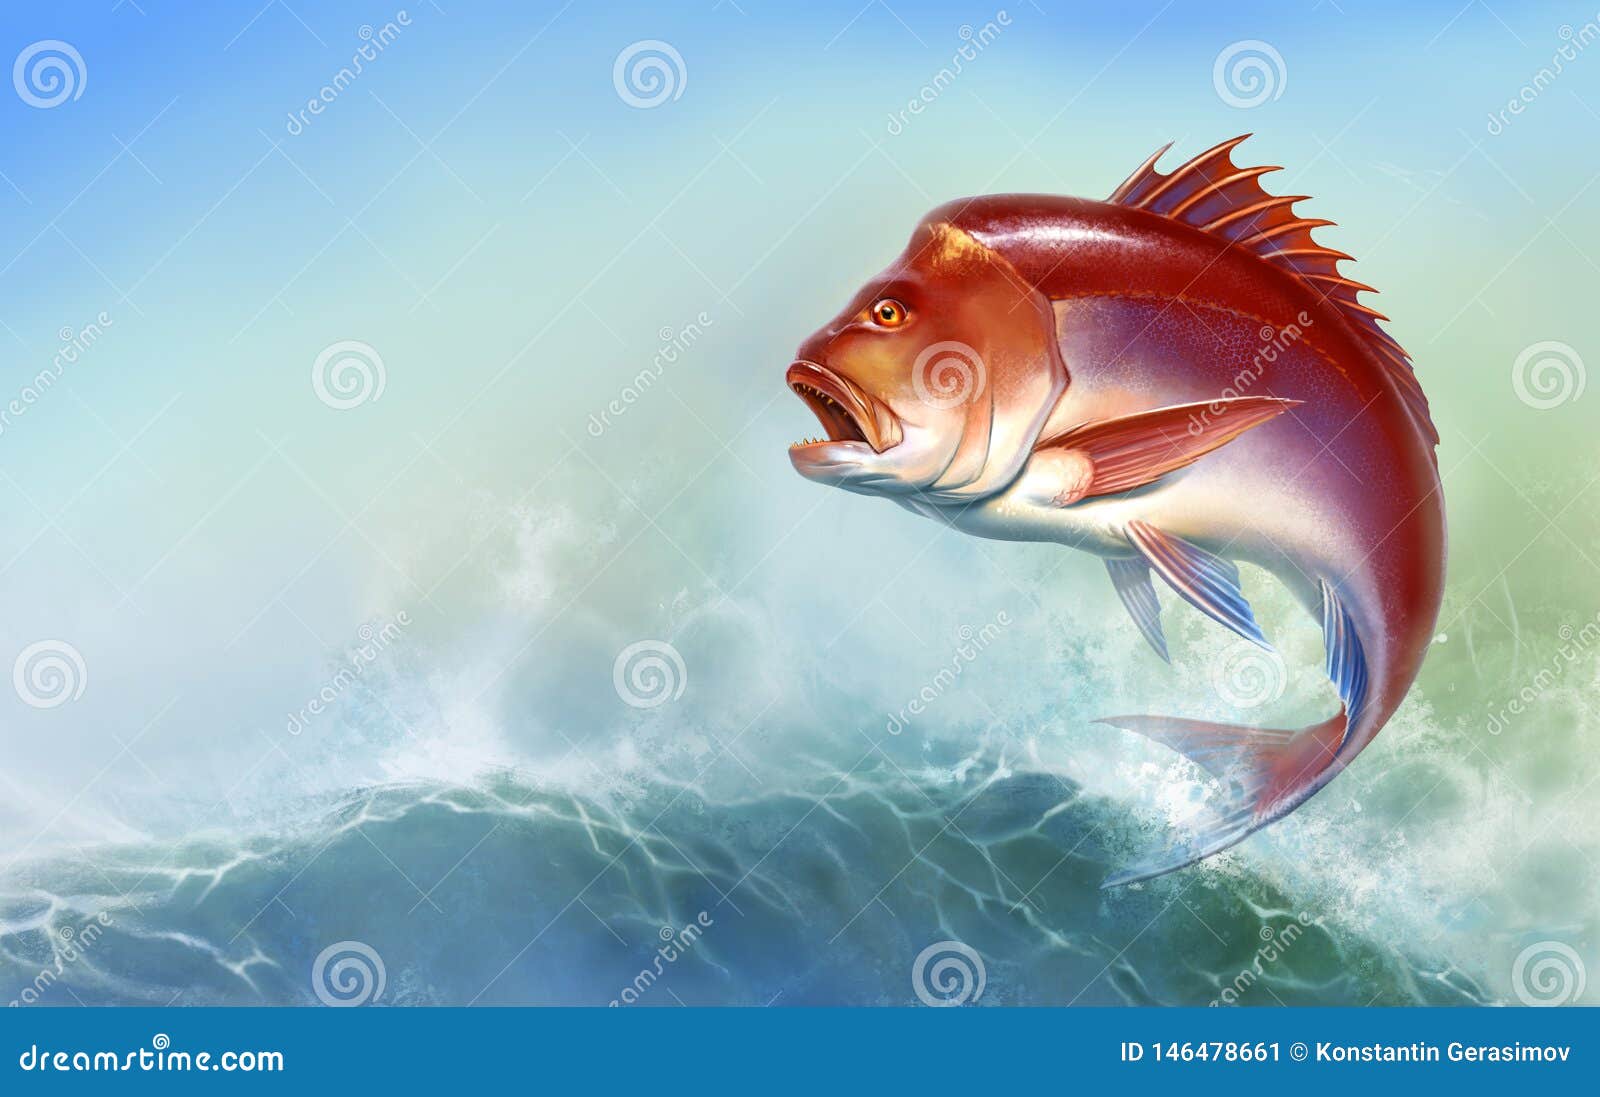 Snapper Red Big Jumps Out the Waves. Stock Illustration - Illustration of fresh, ocean: 146478661